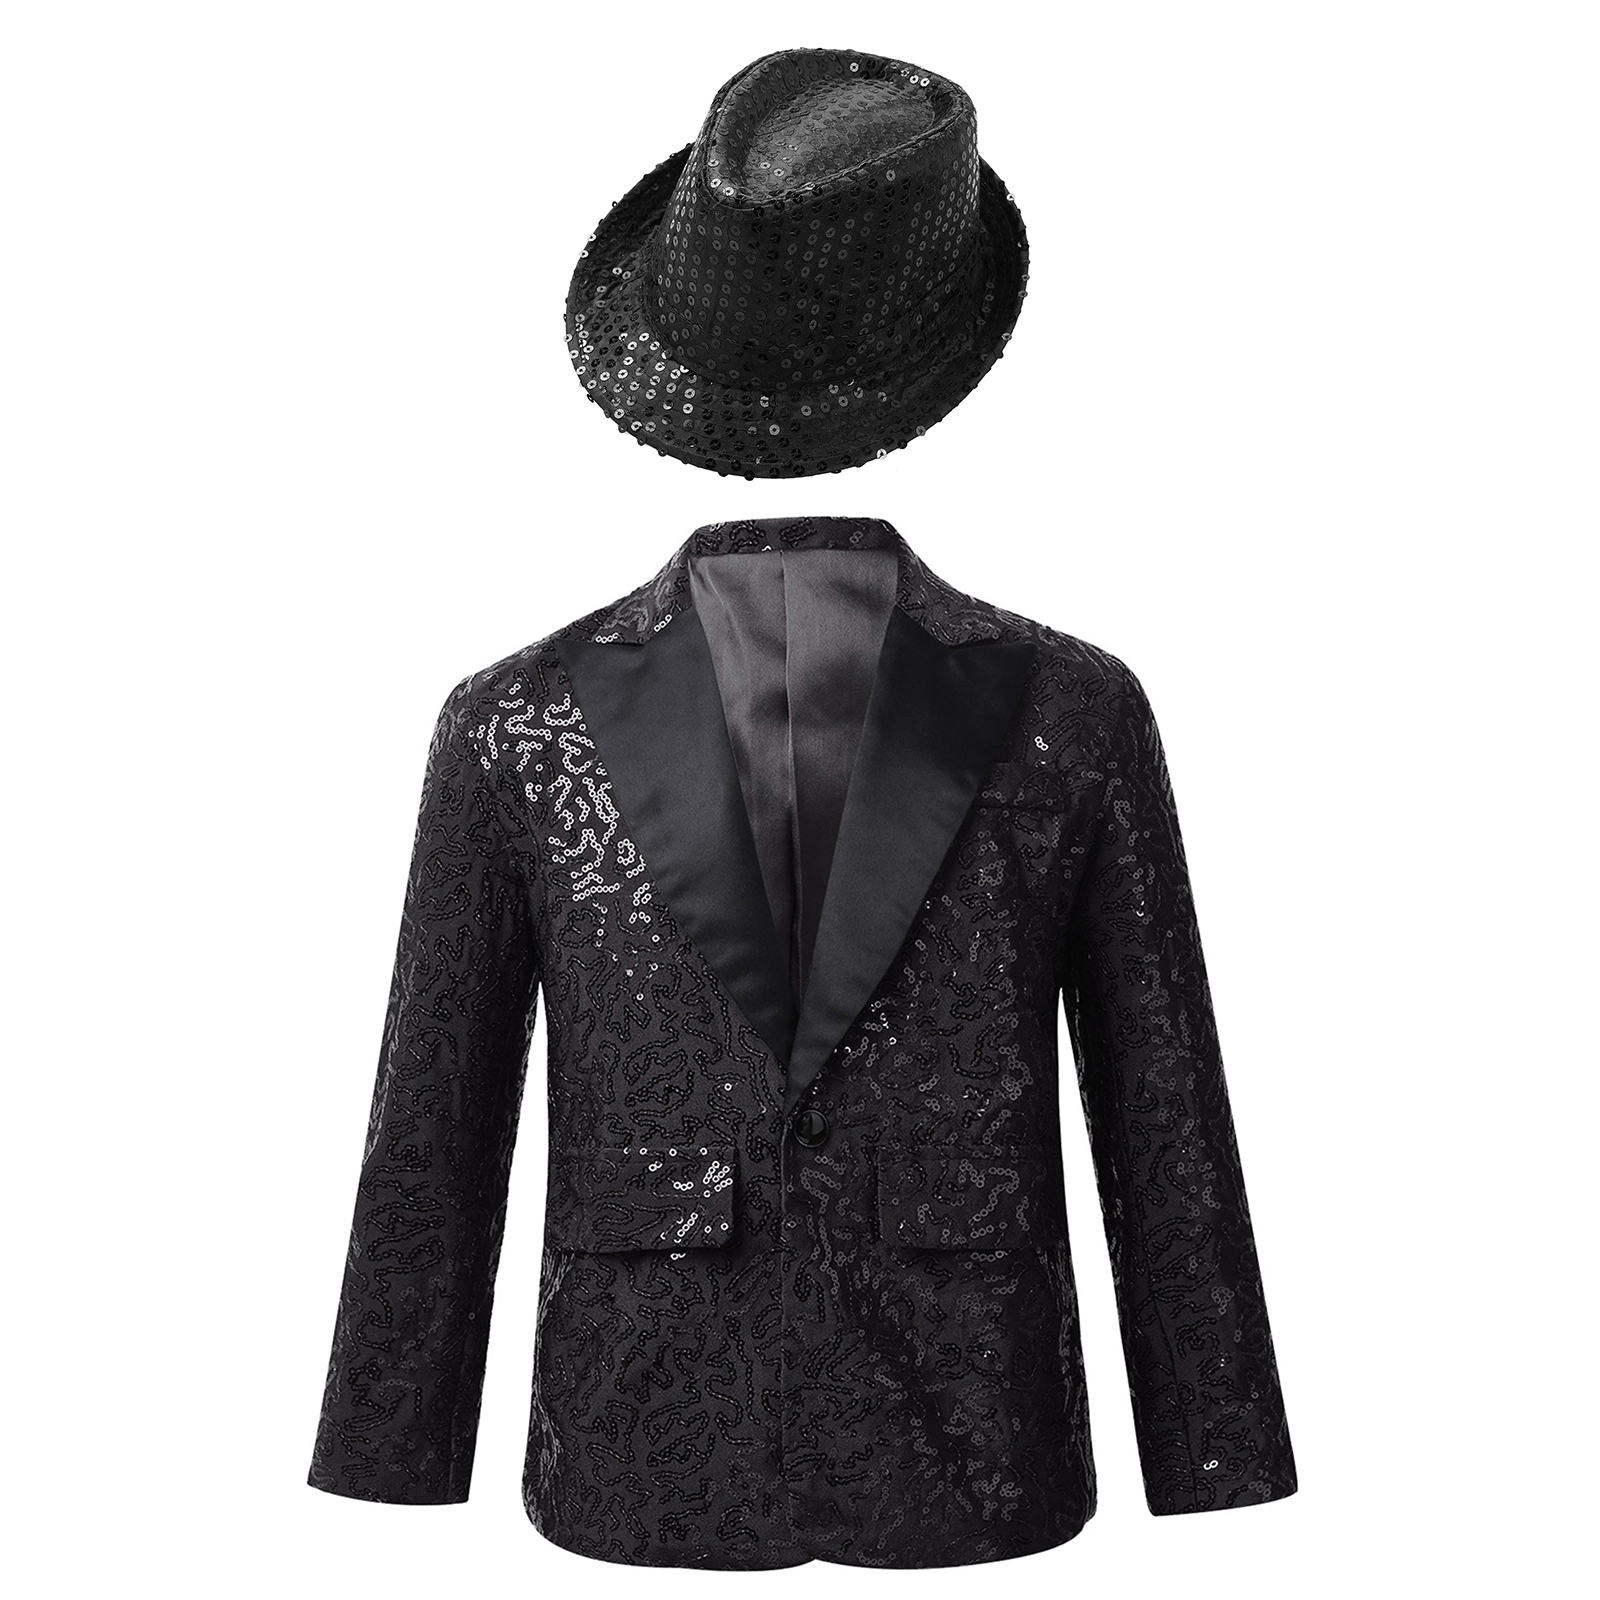 MSemis Kids Boys Shiny Sequin Suit Jacket Party Blazer Dance Tuxedo Costume with Hat,Size 6-16 Black 10 - image 1 of 6